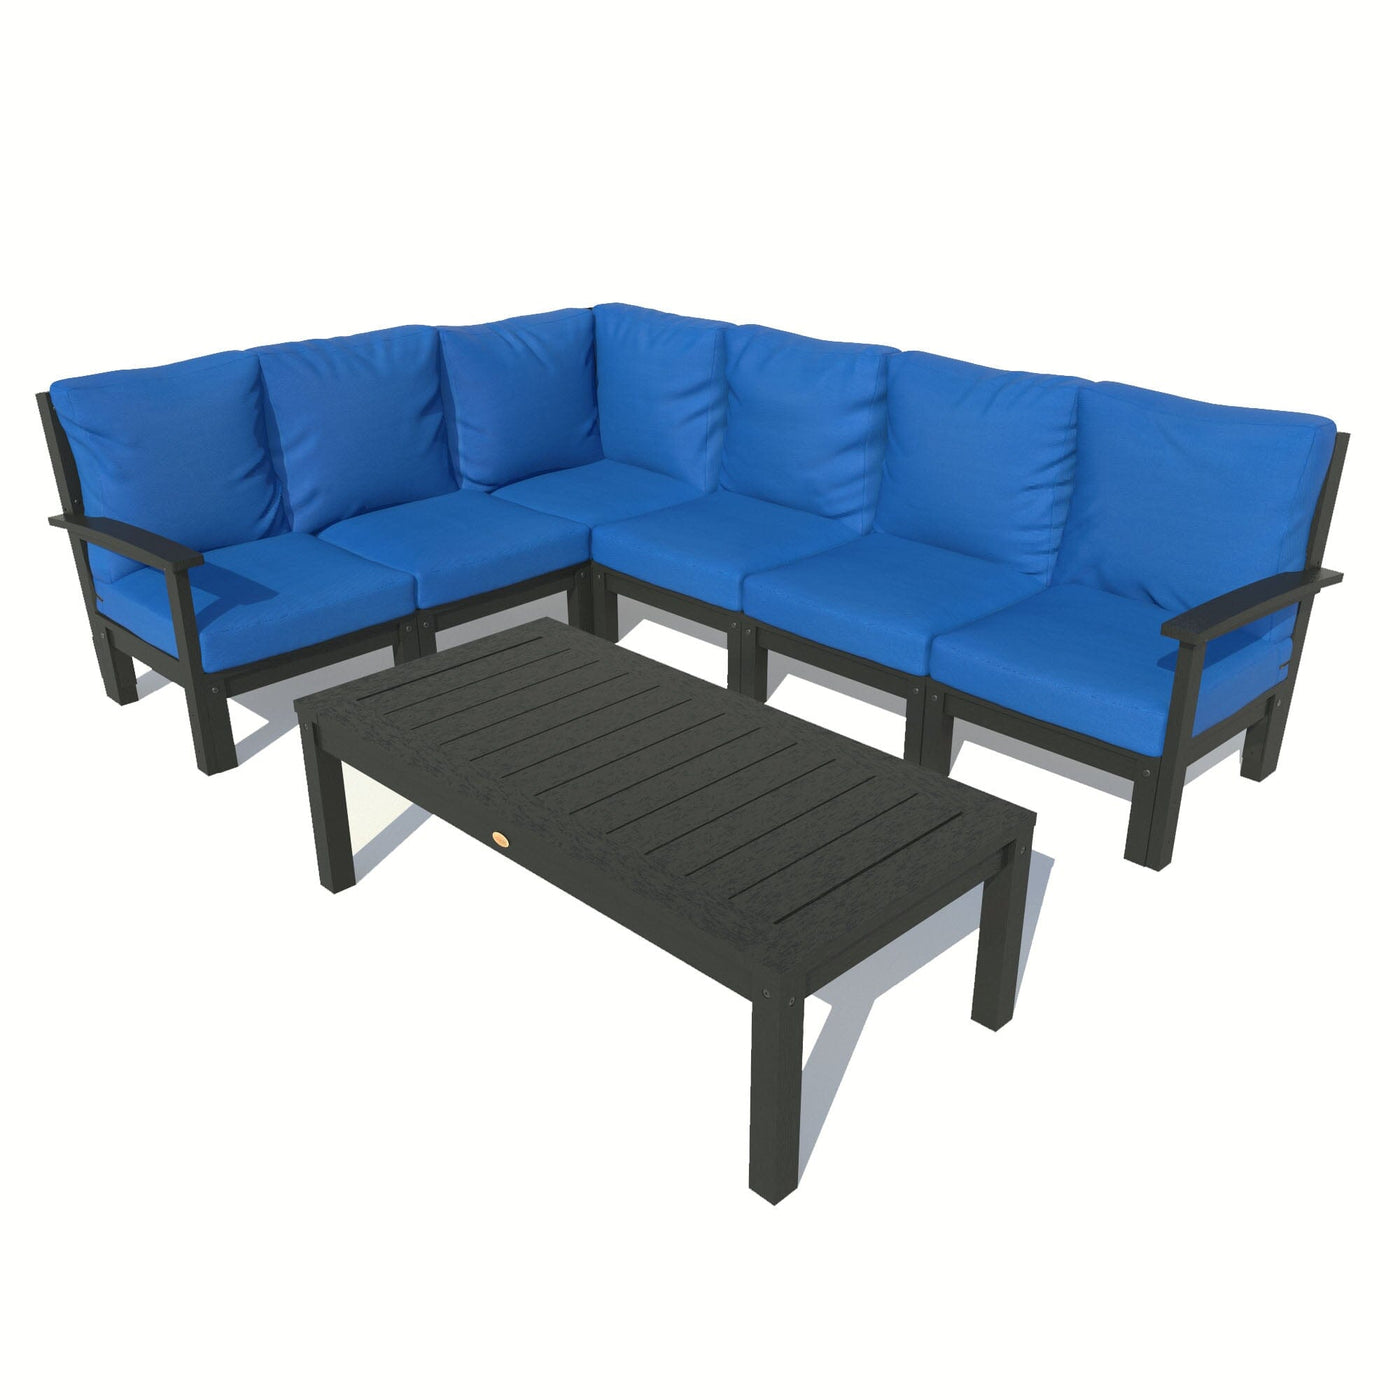 Bespoke Deep Seating: 7 Piece Sectional Sofa Set with Conversation Table Deep Seating Highwood USA Cobalt Blue Black 